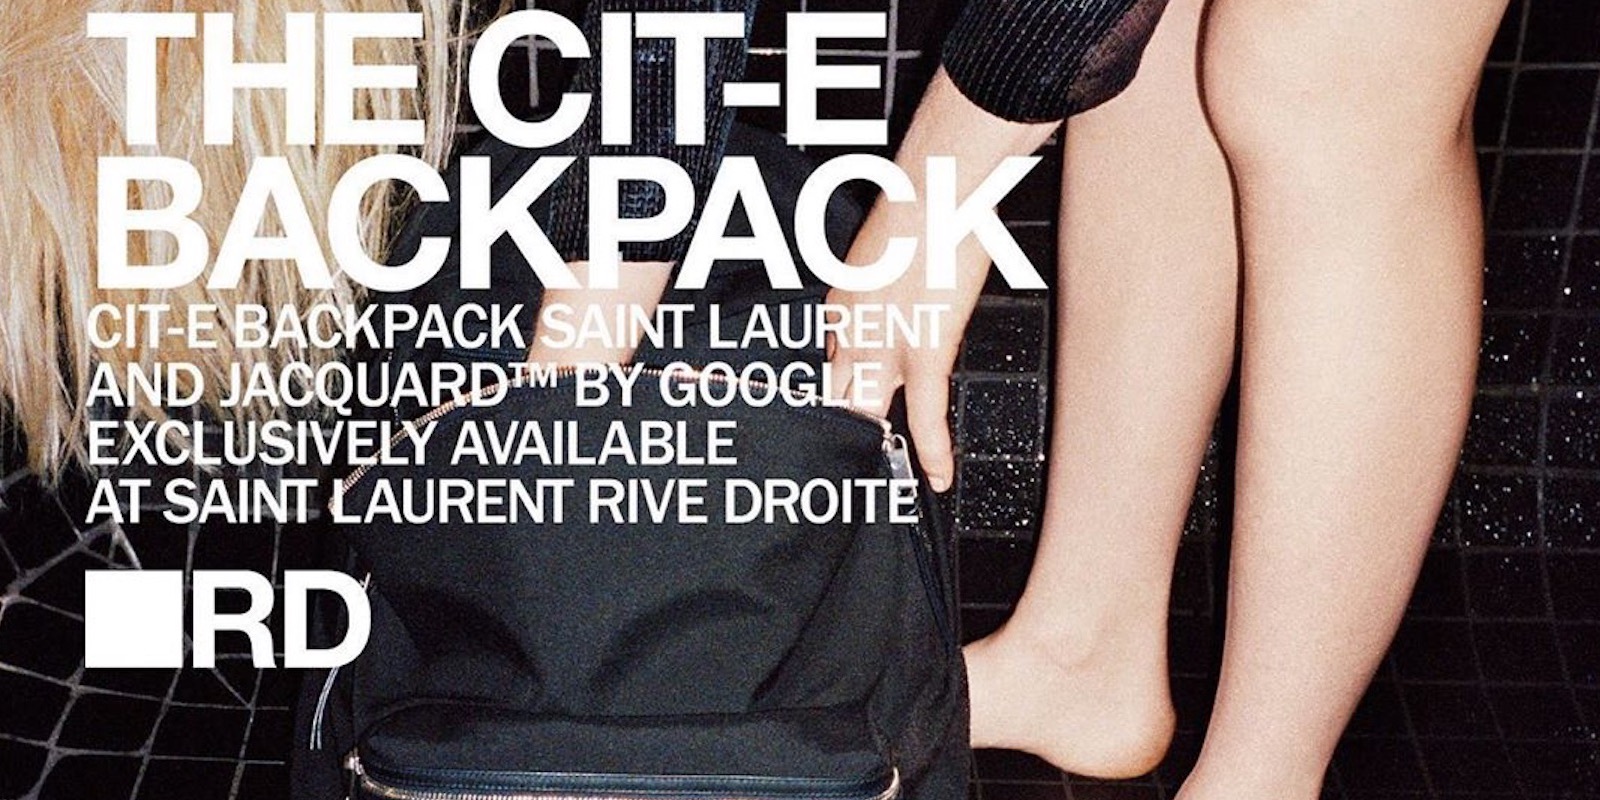 Google Jacquard backpack